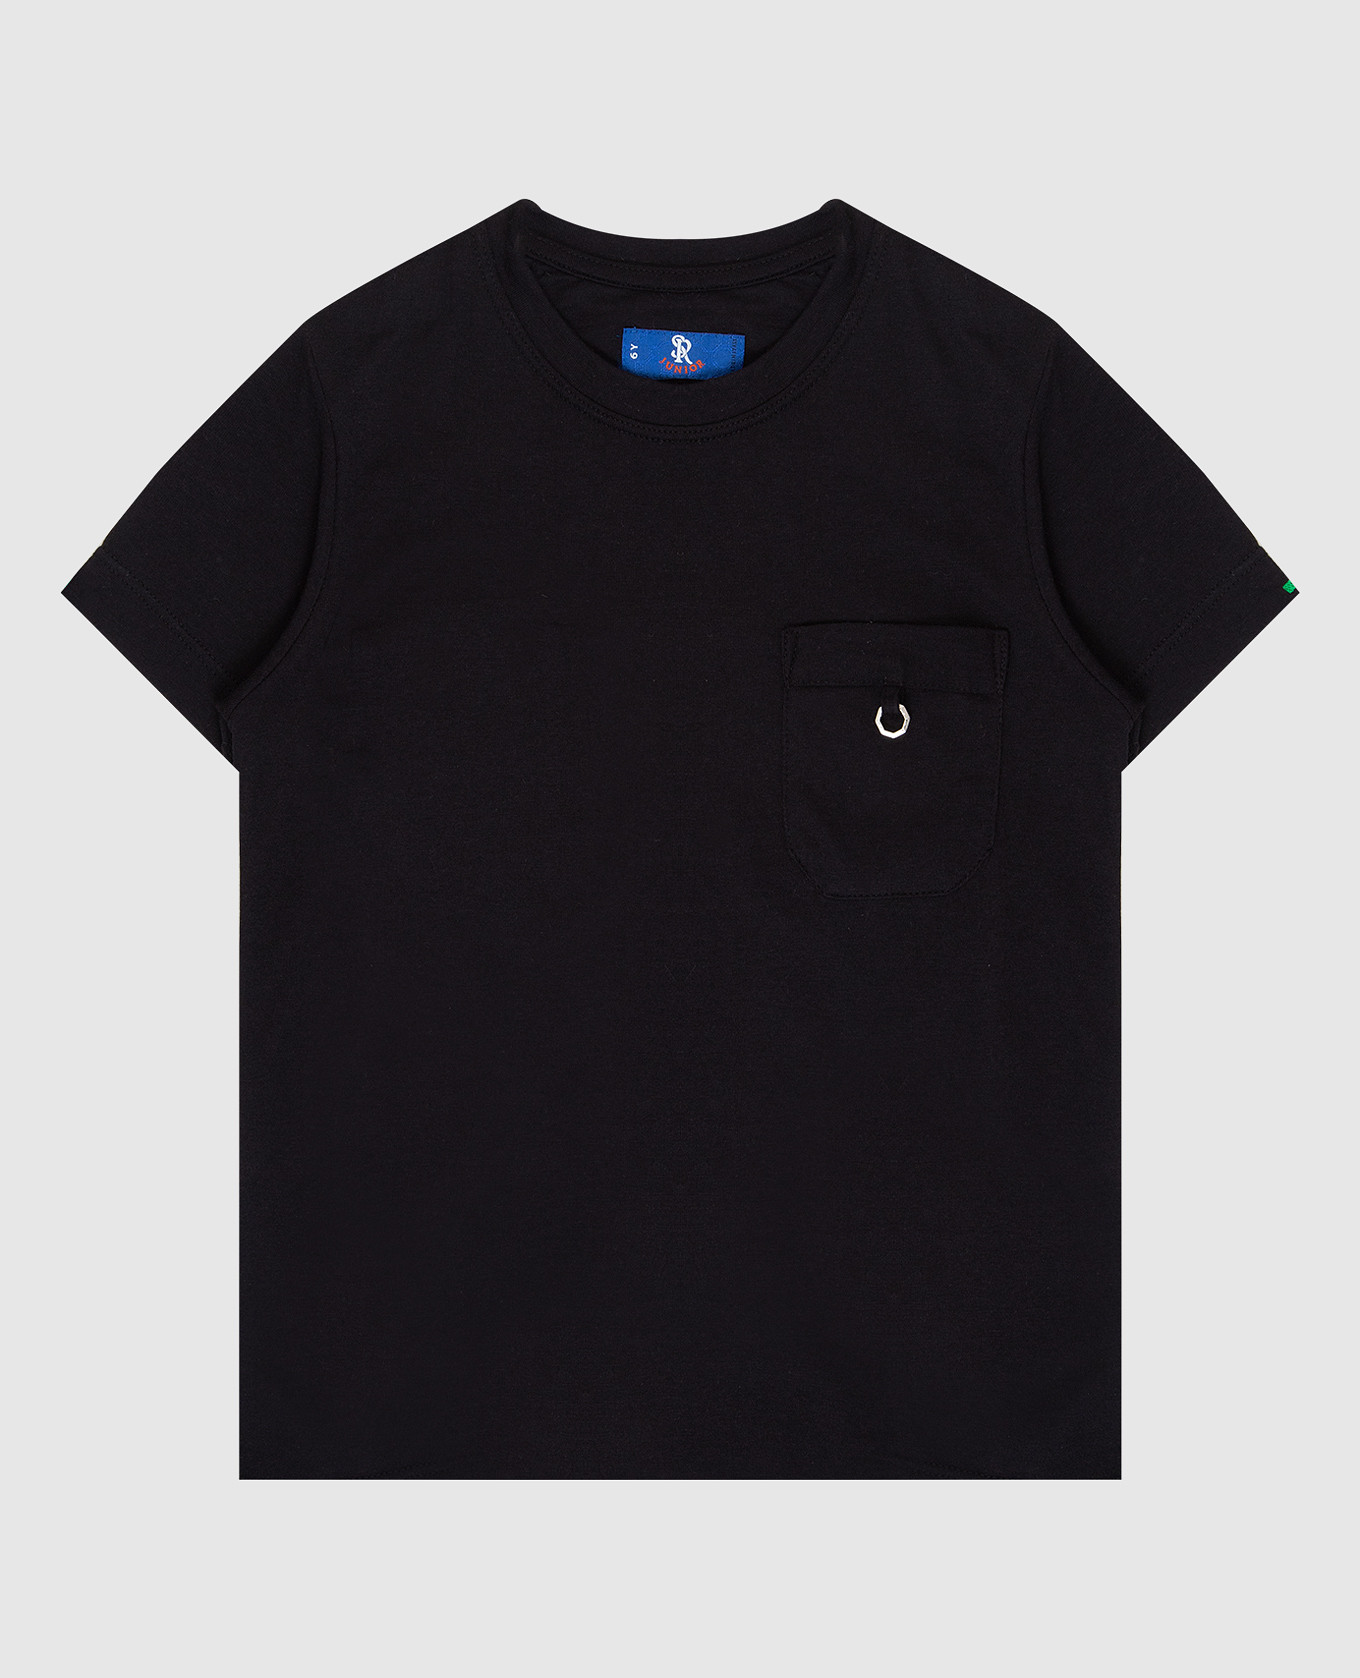 Children's black t-shirt